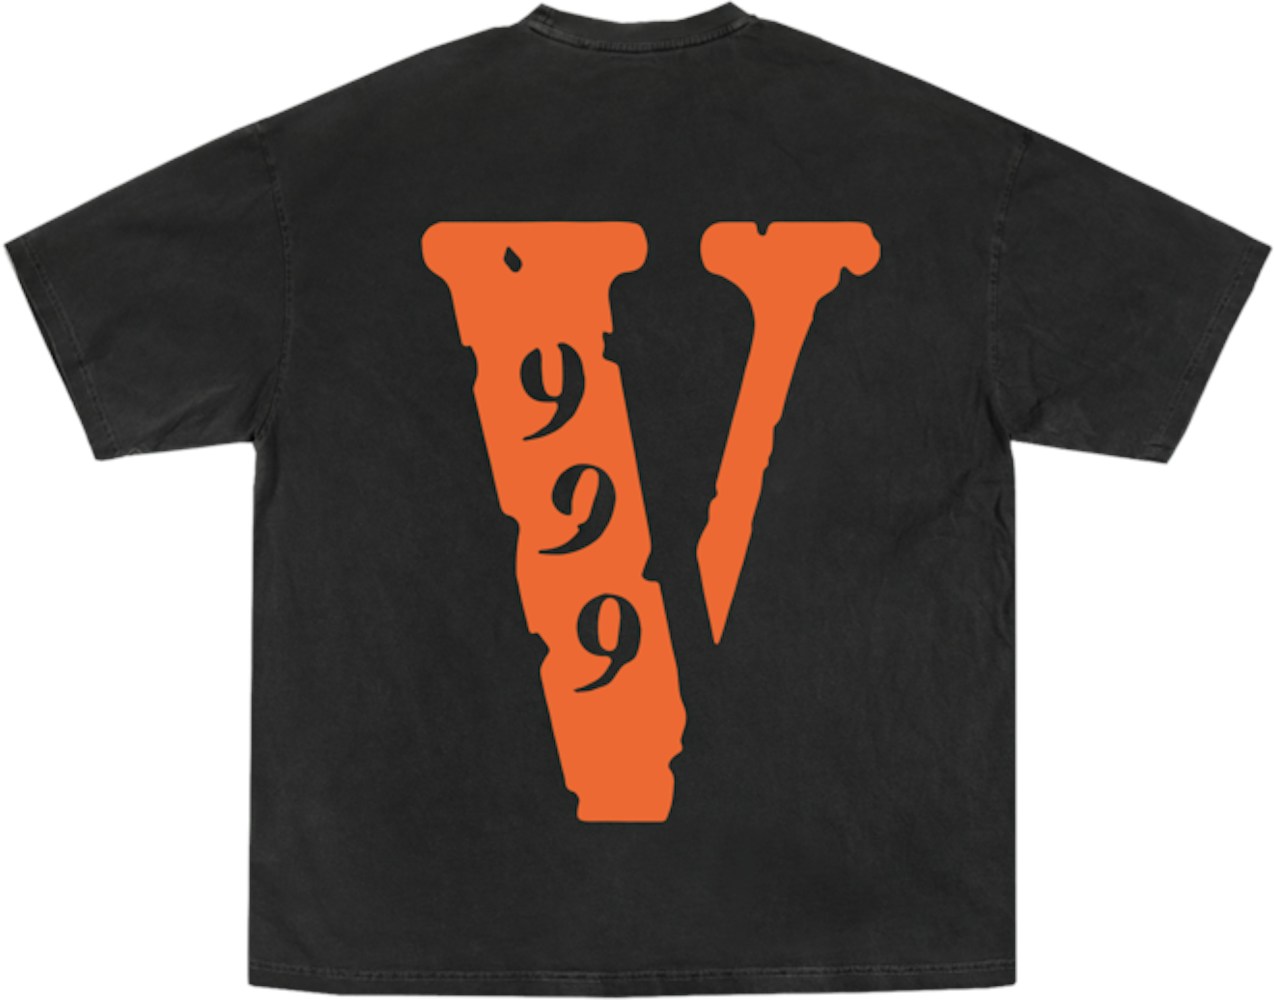 Wrld x Vlone 999 T-Shirt Black SS20